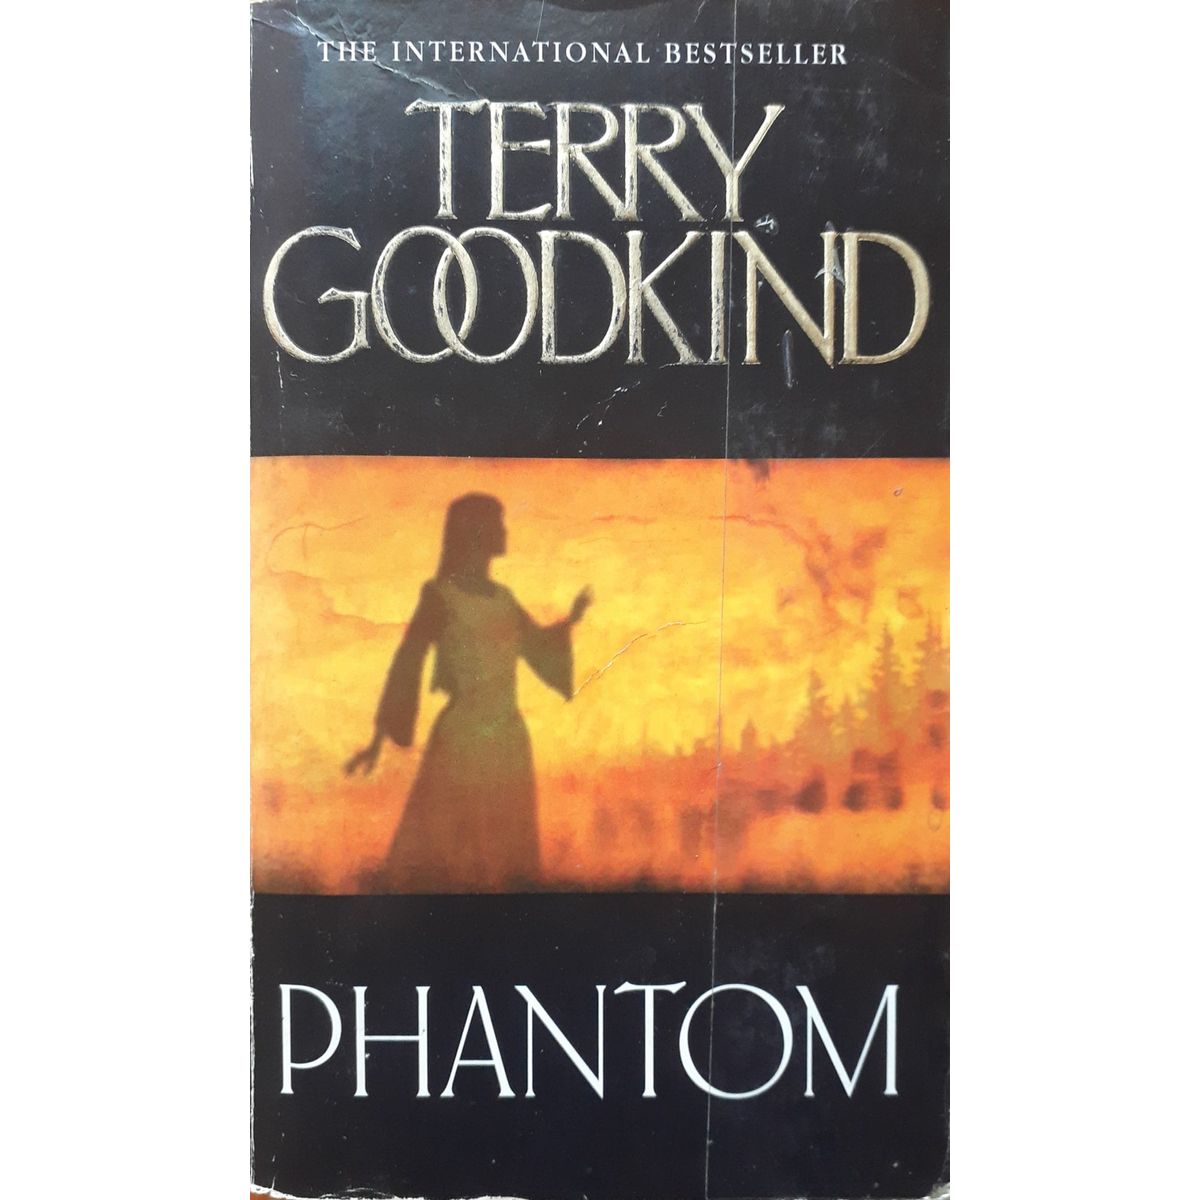 ISBN: 9780007145652 / 0007145659 - Phantom by Terry Goodkind [2007]